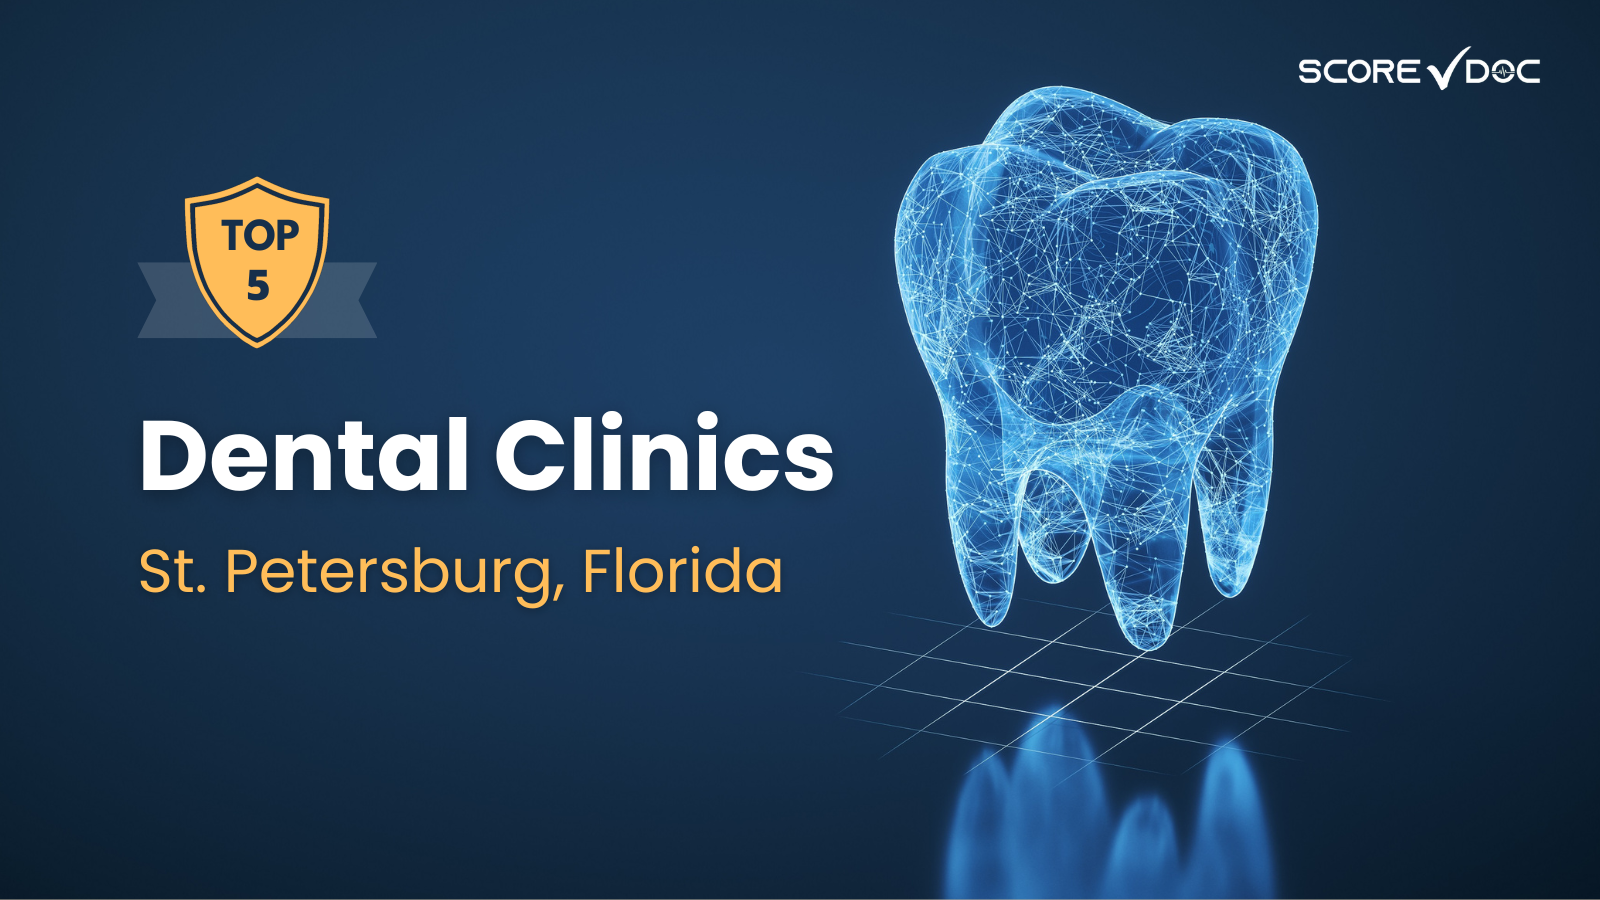 Five Top Rated Dental Clinics in Saint Petersburg, Florida